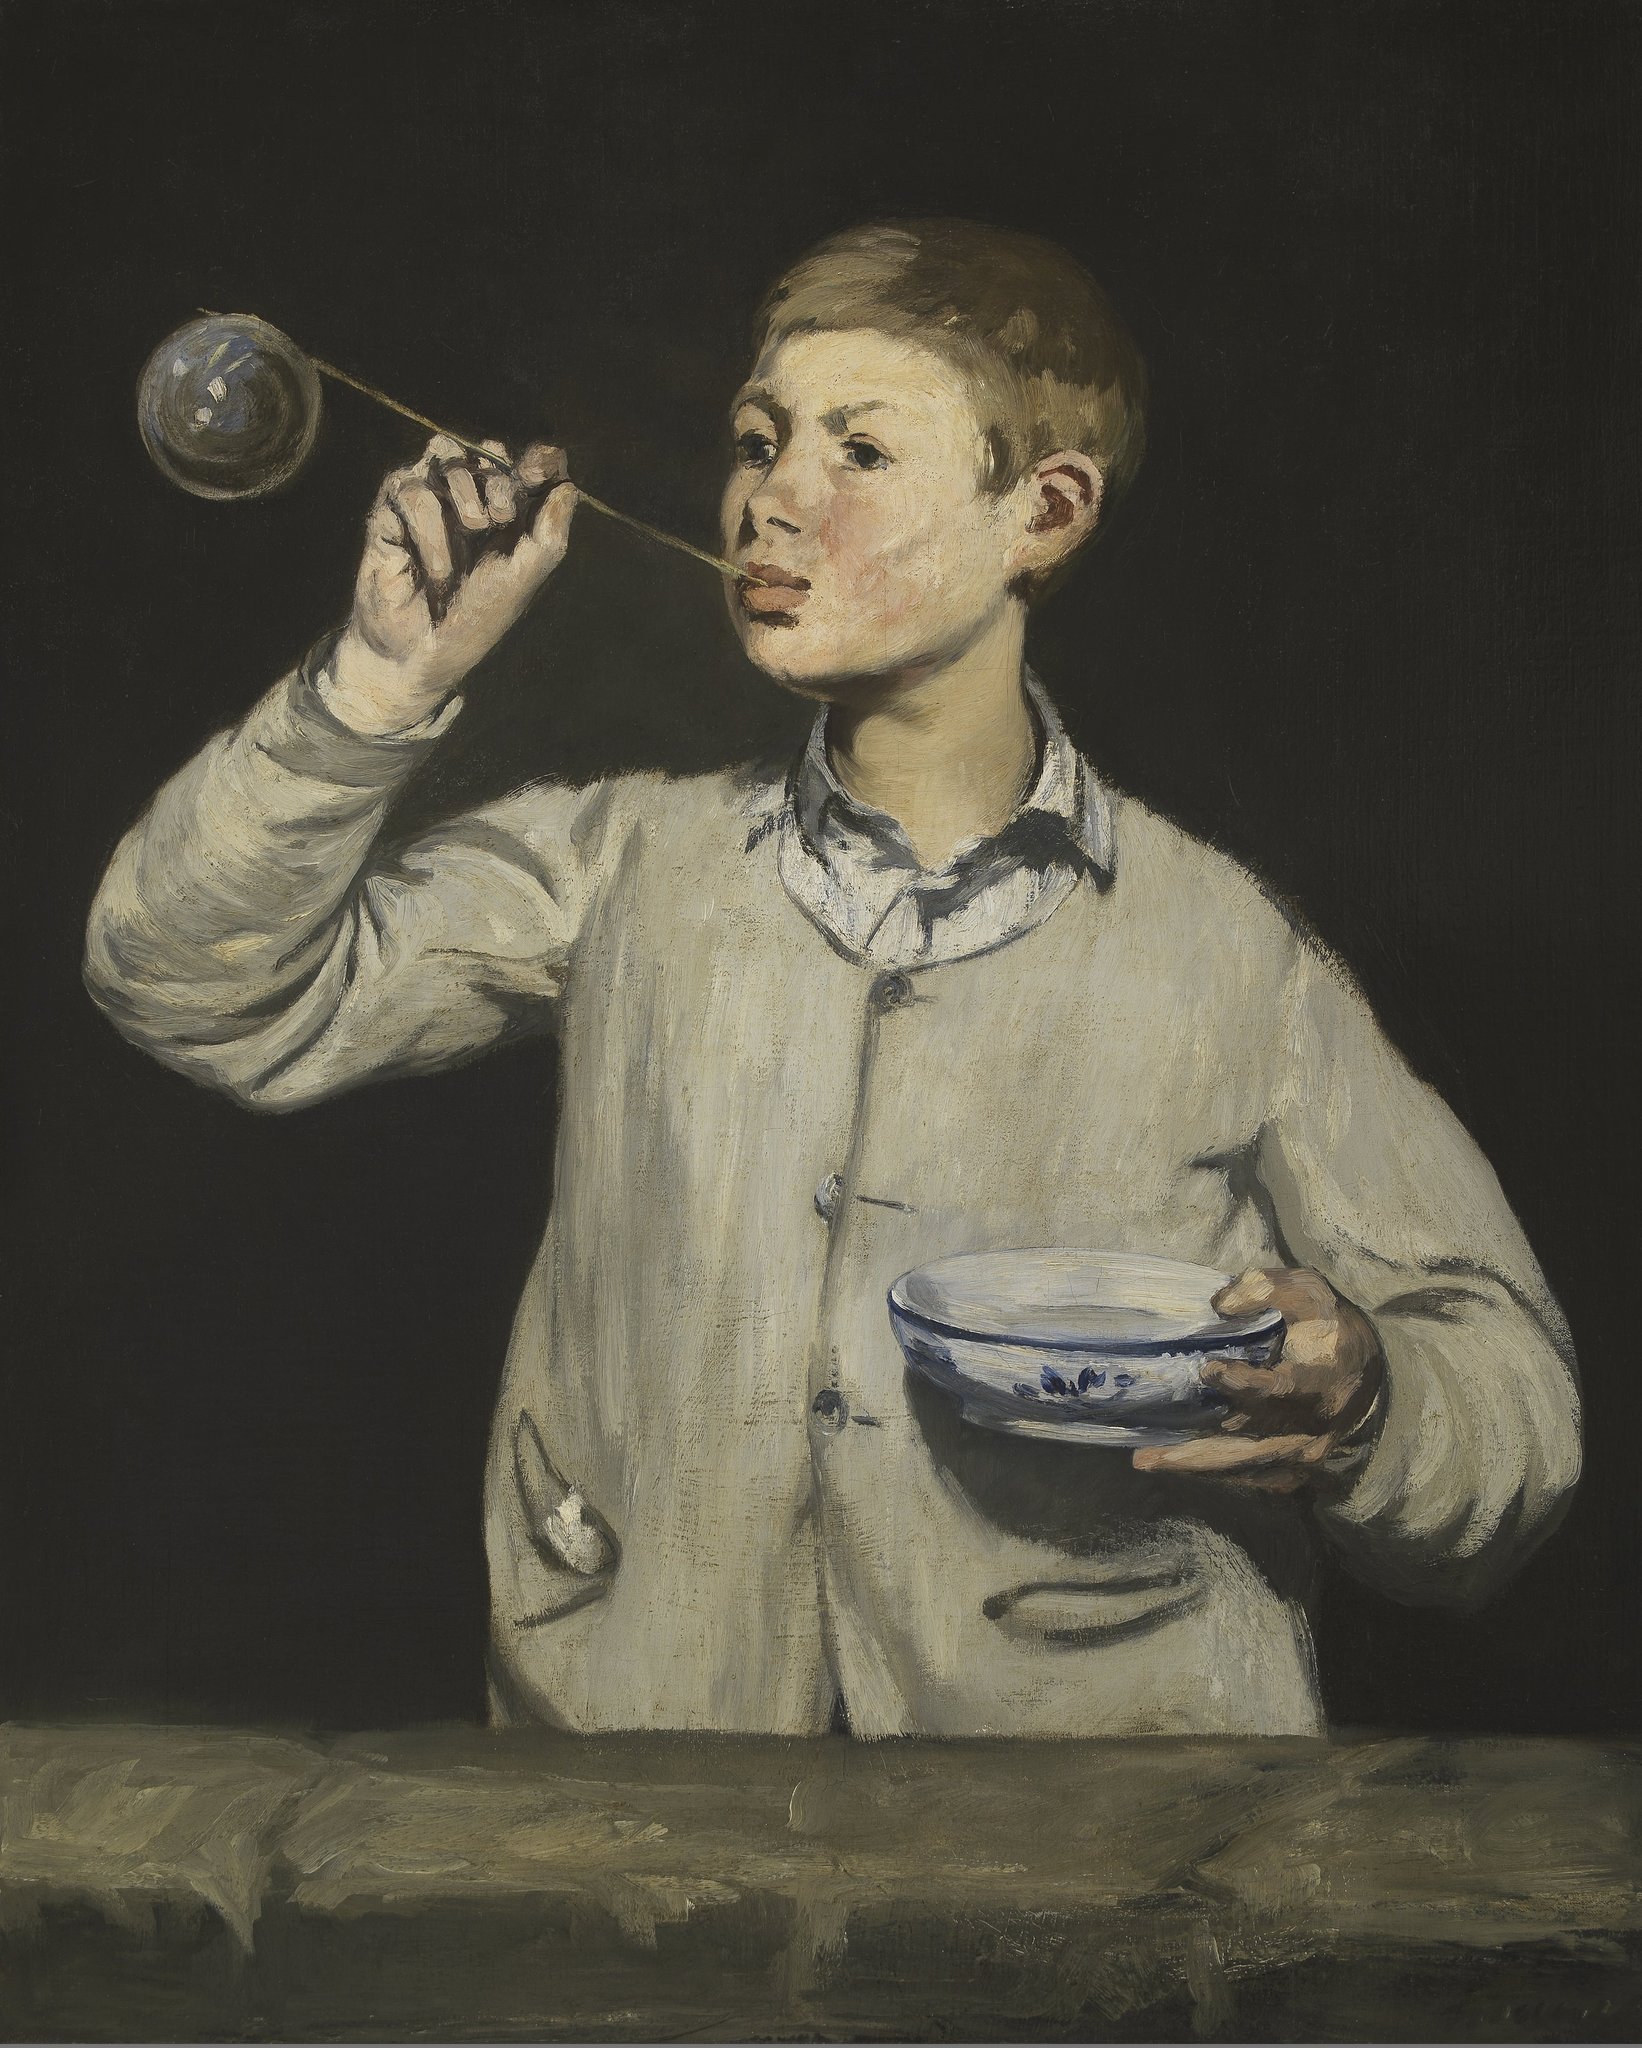 Ragazzo che soffia bolle di sapone by Édouard Manet - 1867 - 100,50 x 81,40 cm 